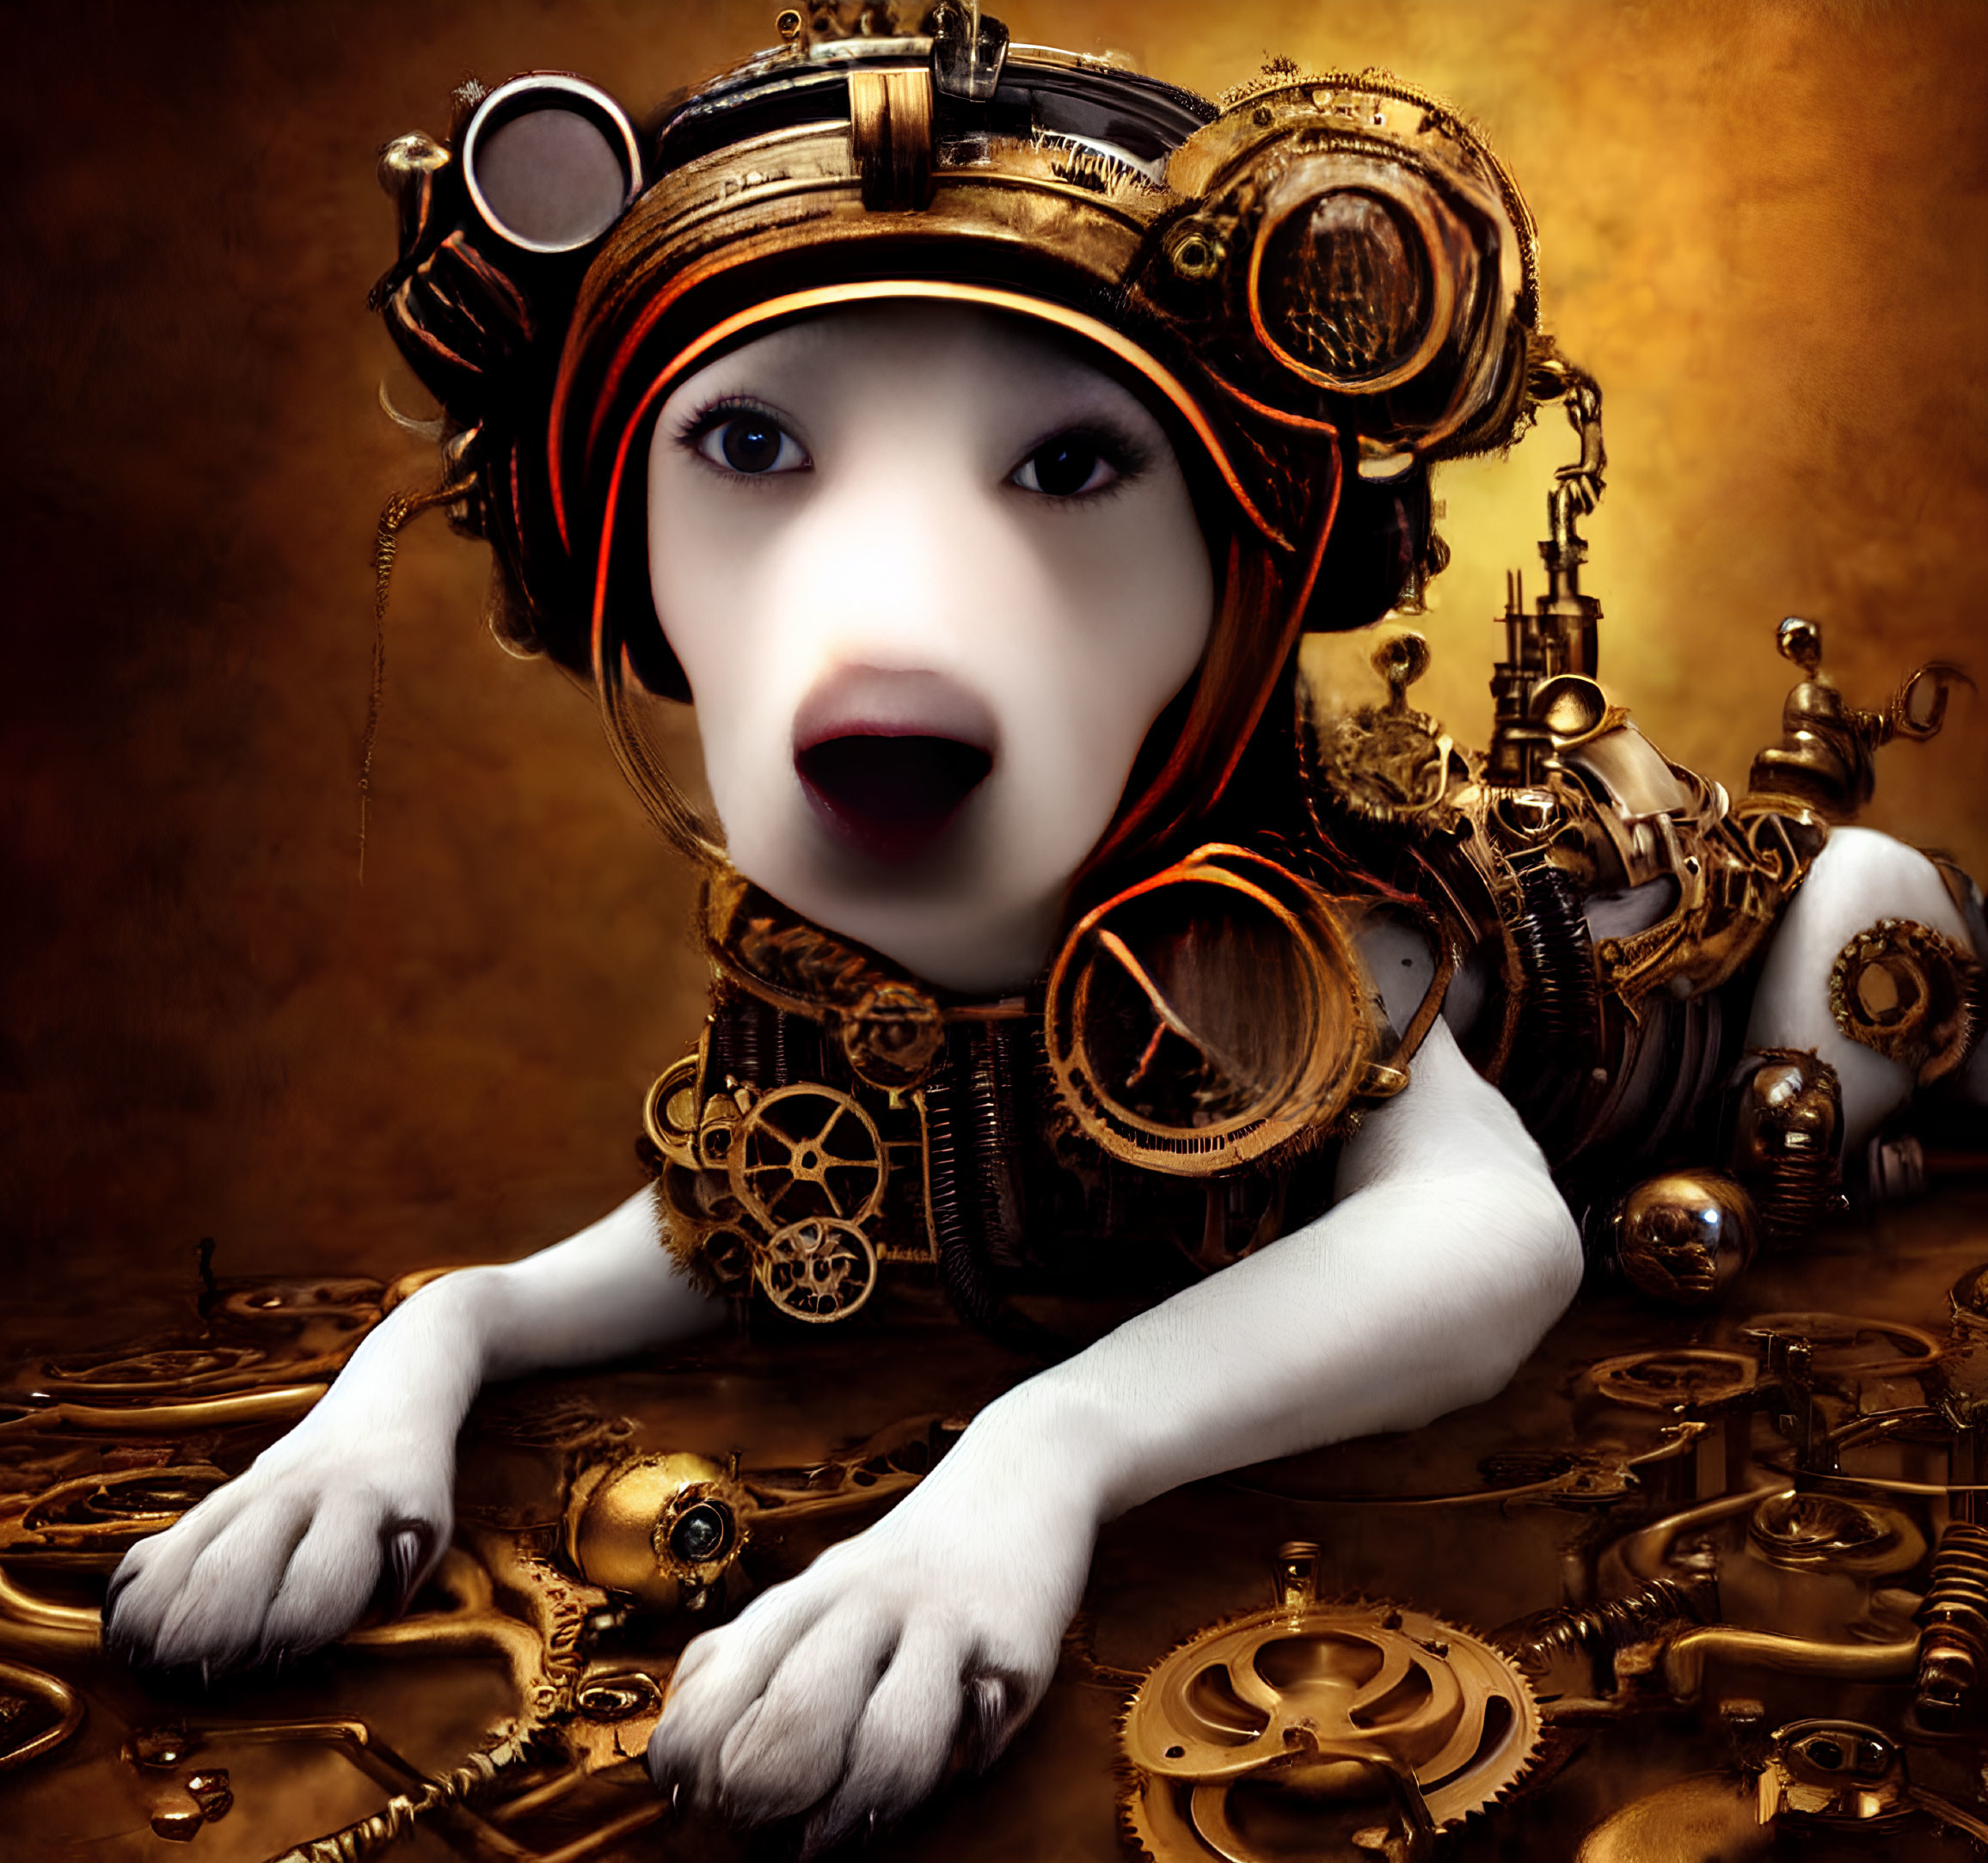 Surreal steampunk artwork: human-like face, dog-like body, mechanical elements.